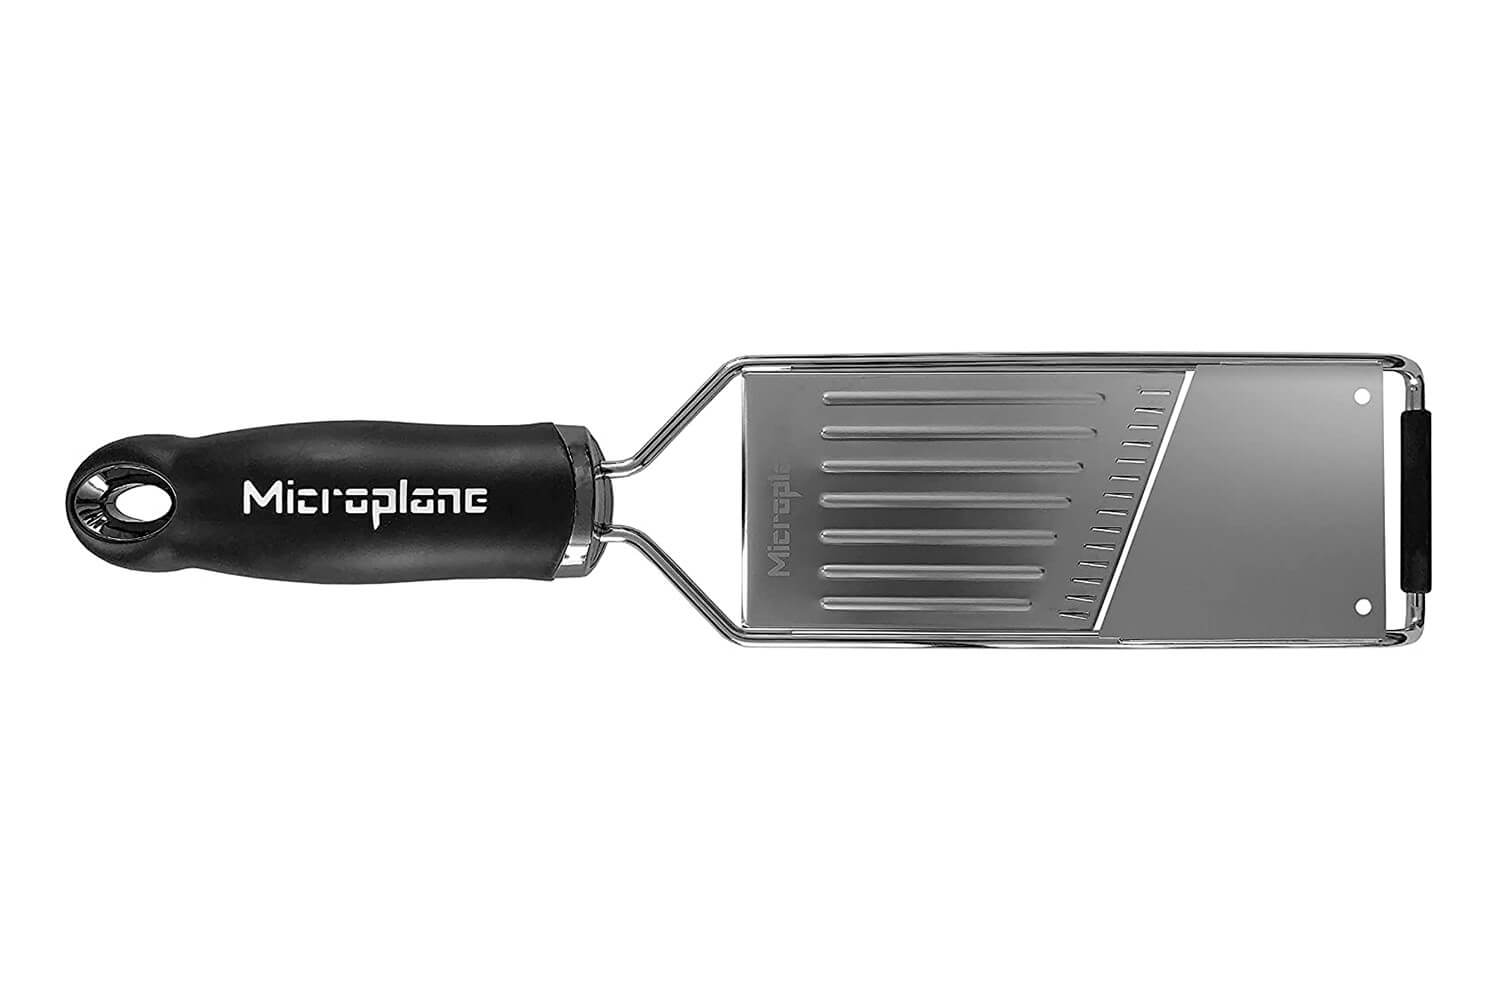 Zesteur et râpe Microplane Premium noir - Eplucheur julienne - Microplane